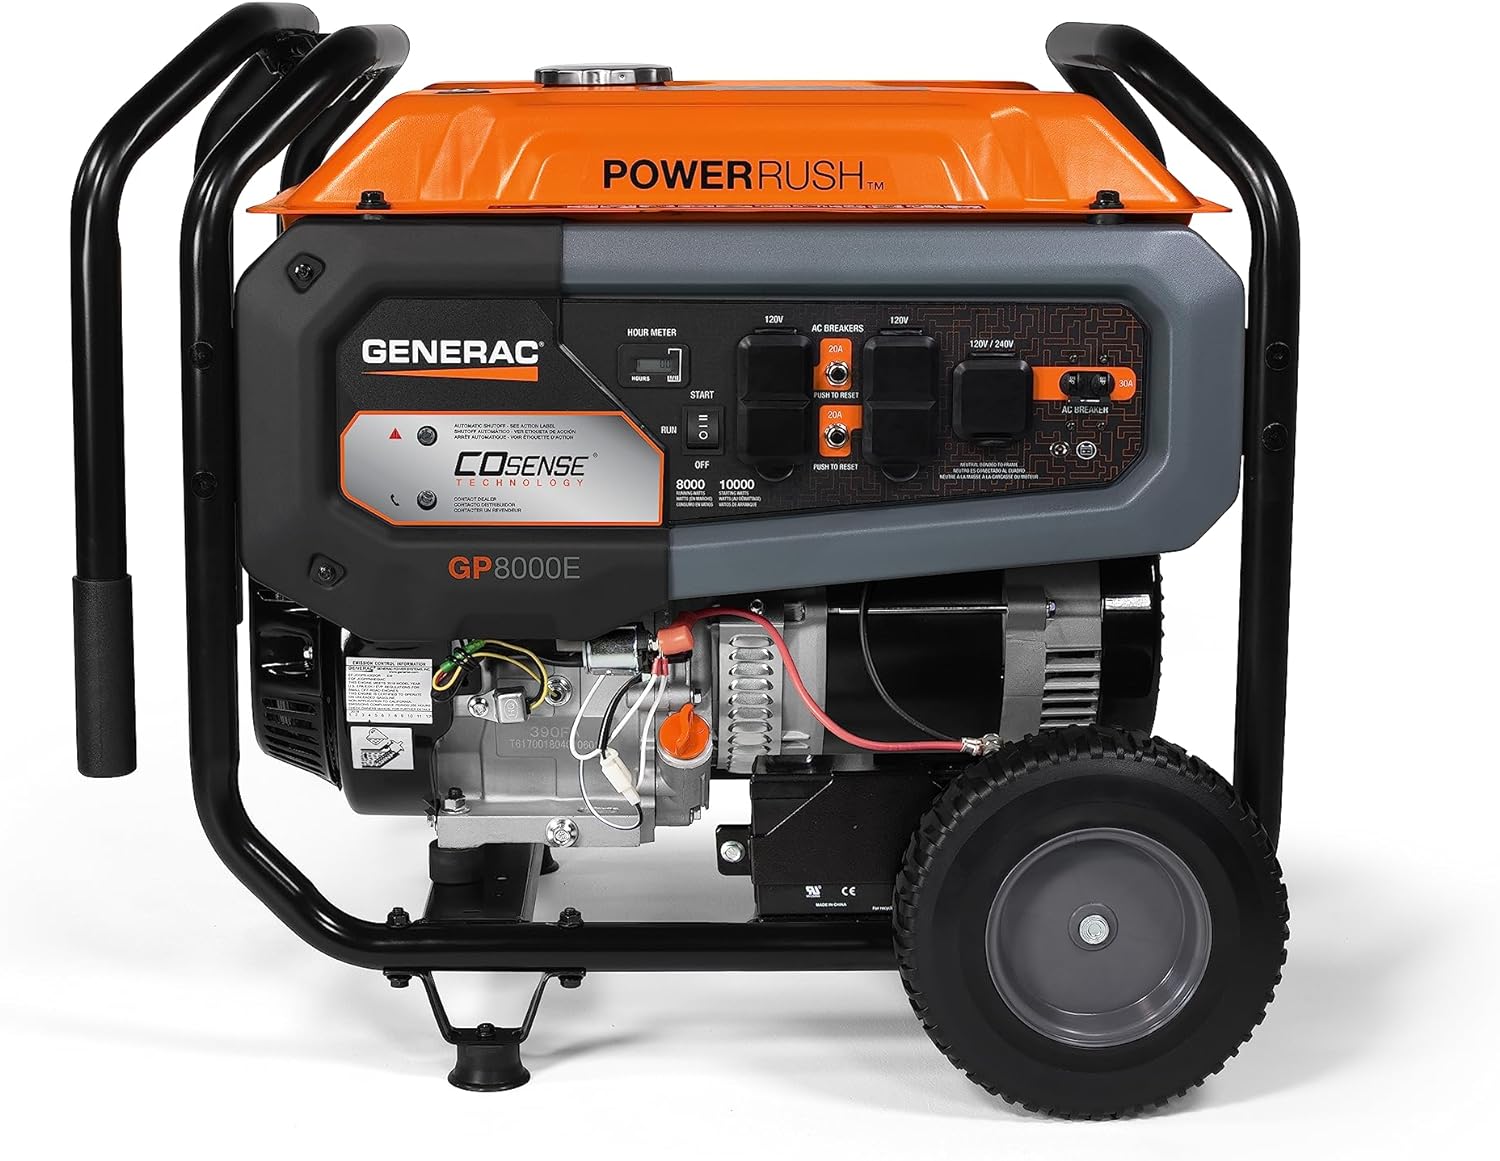 Generac 7715 GP8000E 8000 Watt 420cc Portable Electric Start Generator with COSense